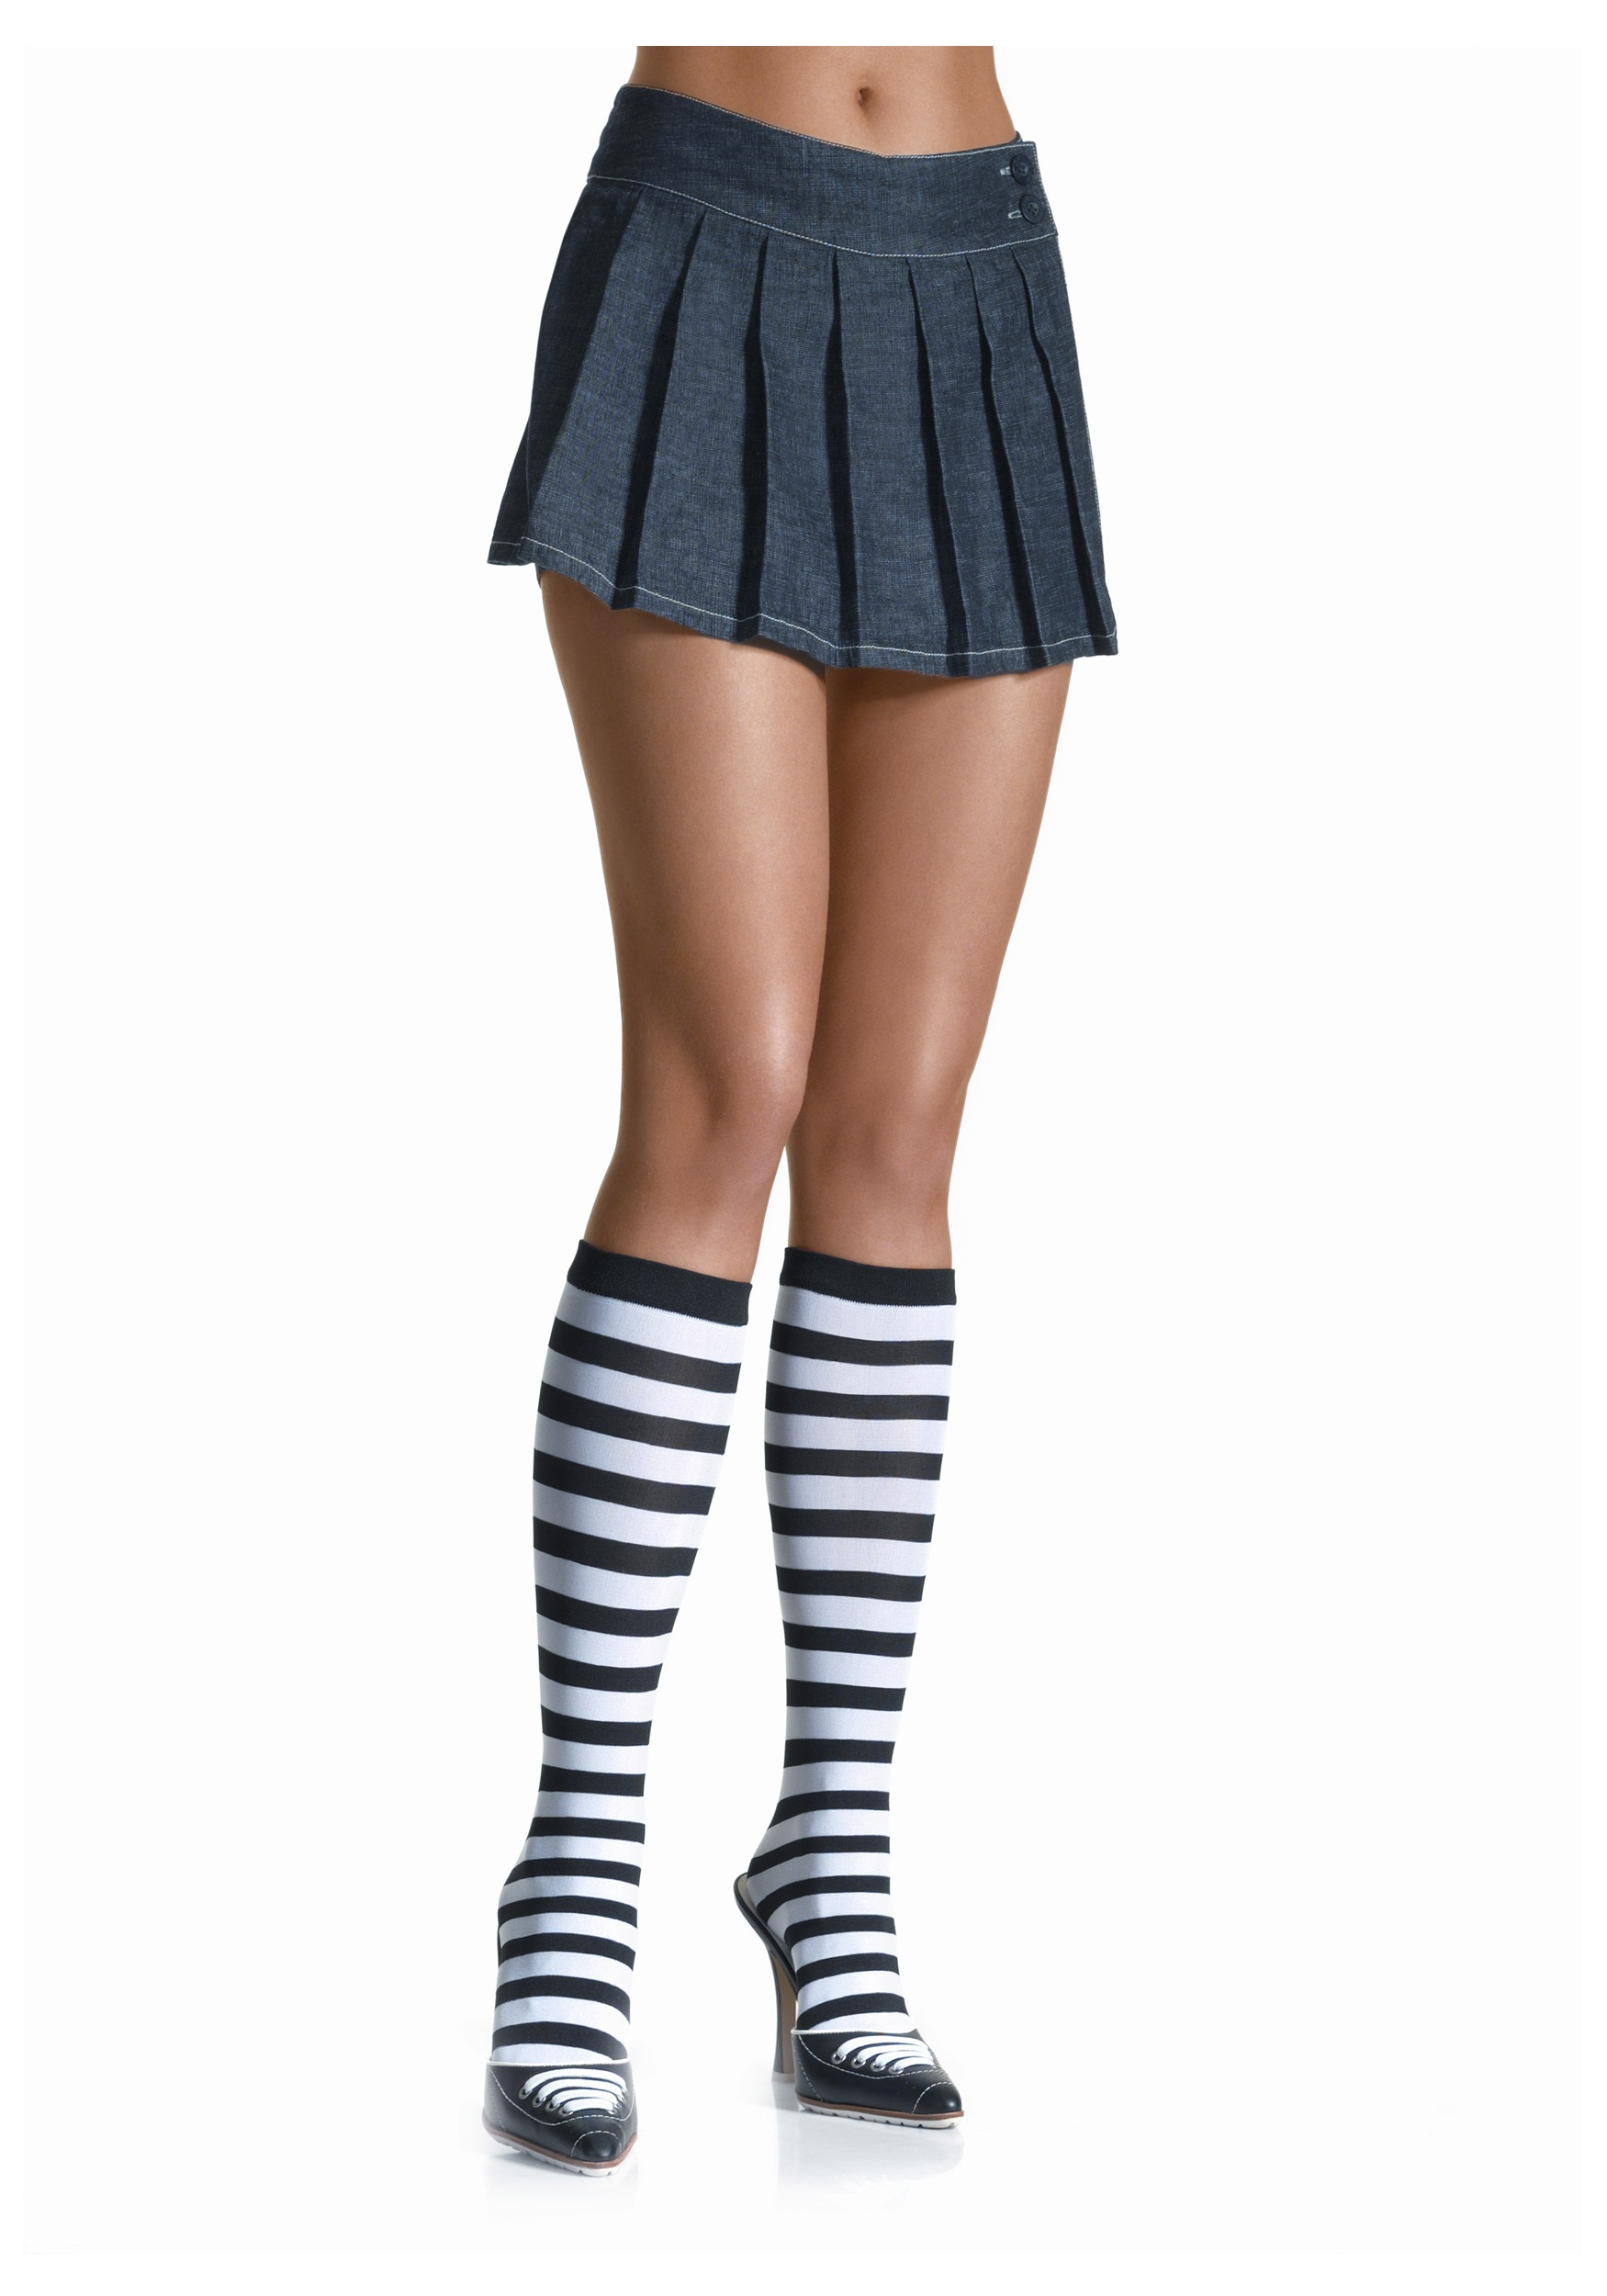 Women’s Black / White Striped Knee High Stockings